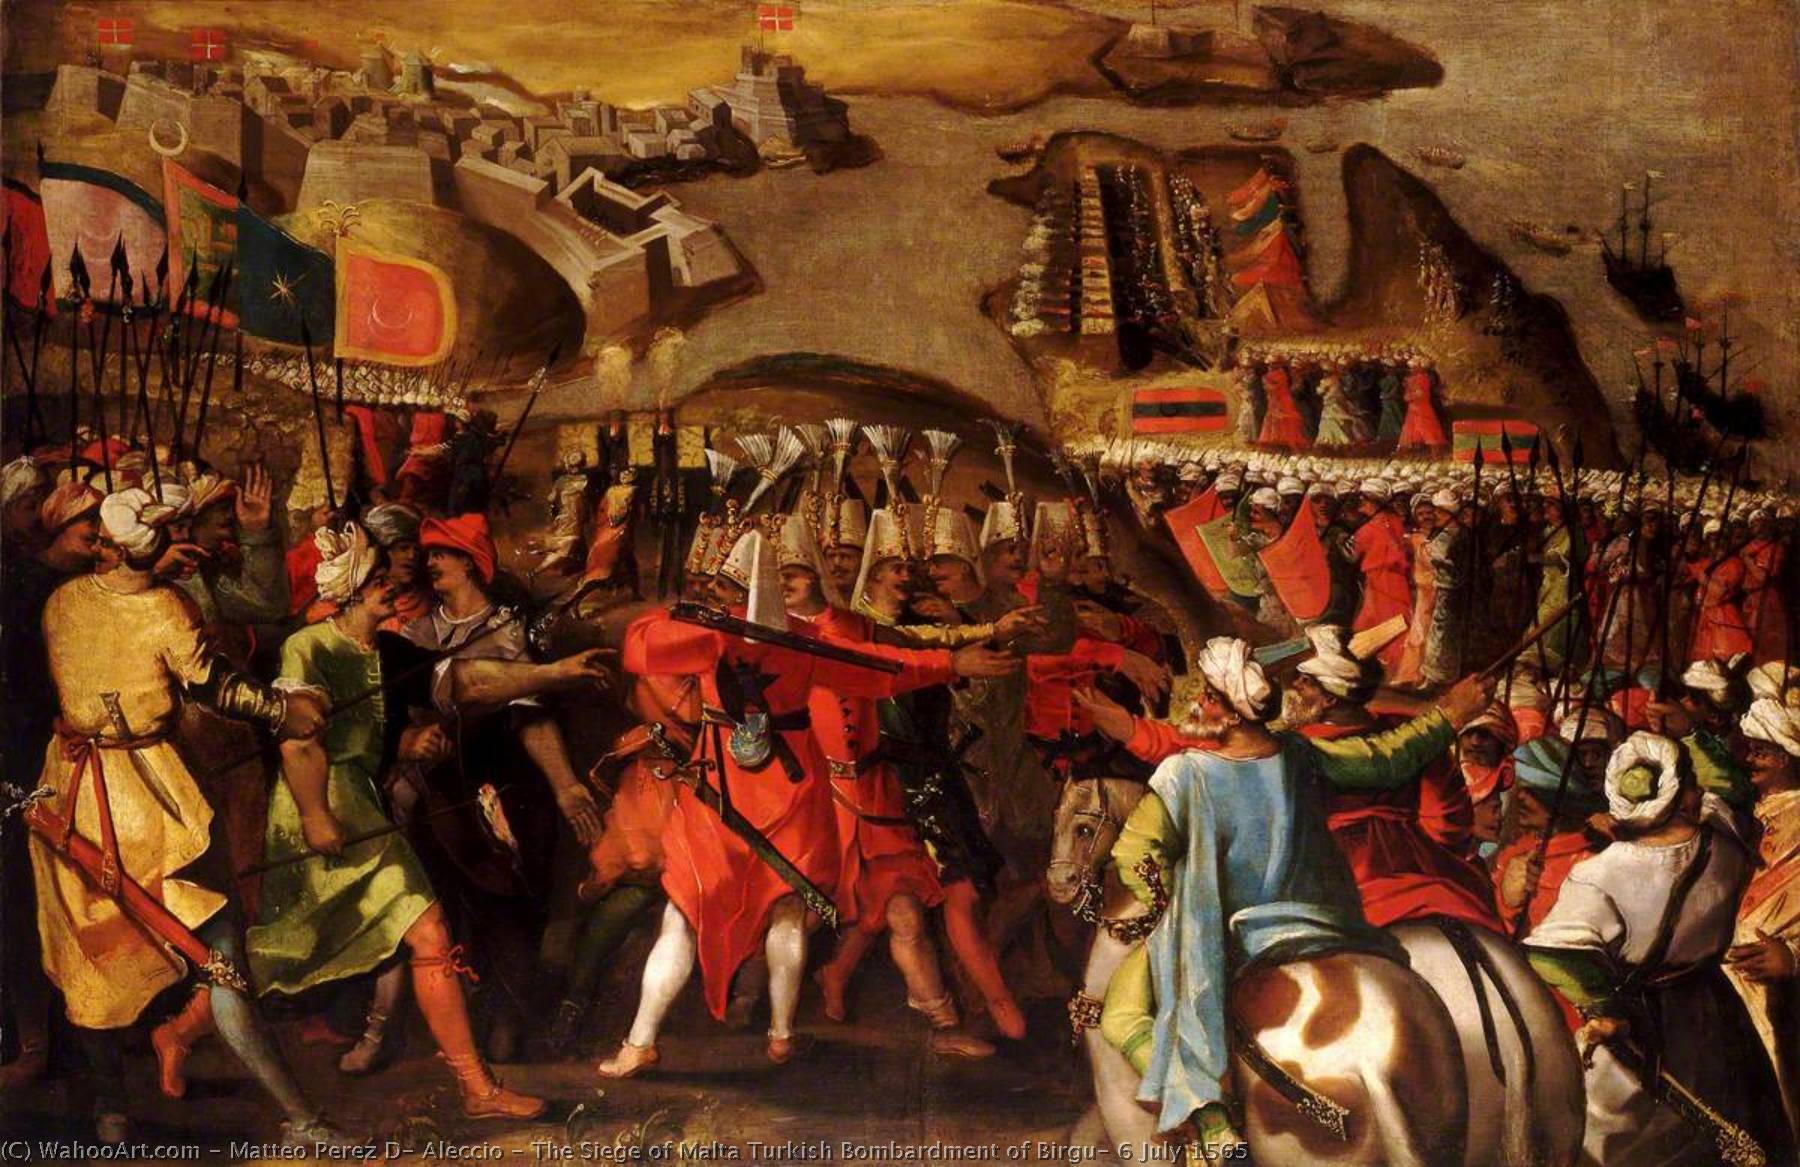 Захват престола. Великая Осада Мальты 1565. Великая Осада Мальты 1565 арт. Осада Мальты турками в 1565. Осада Мальты госпитальерами.